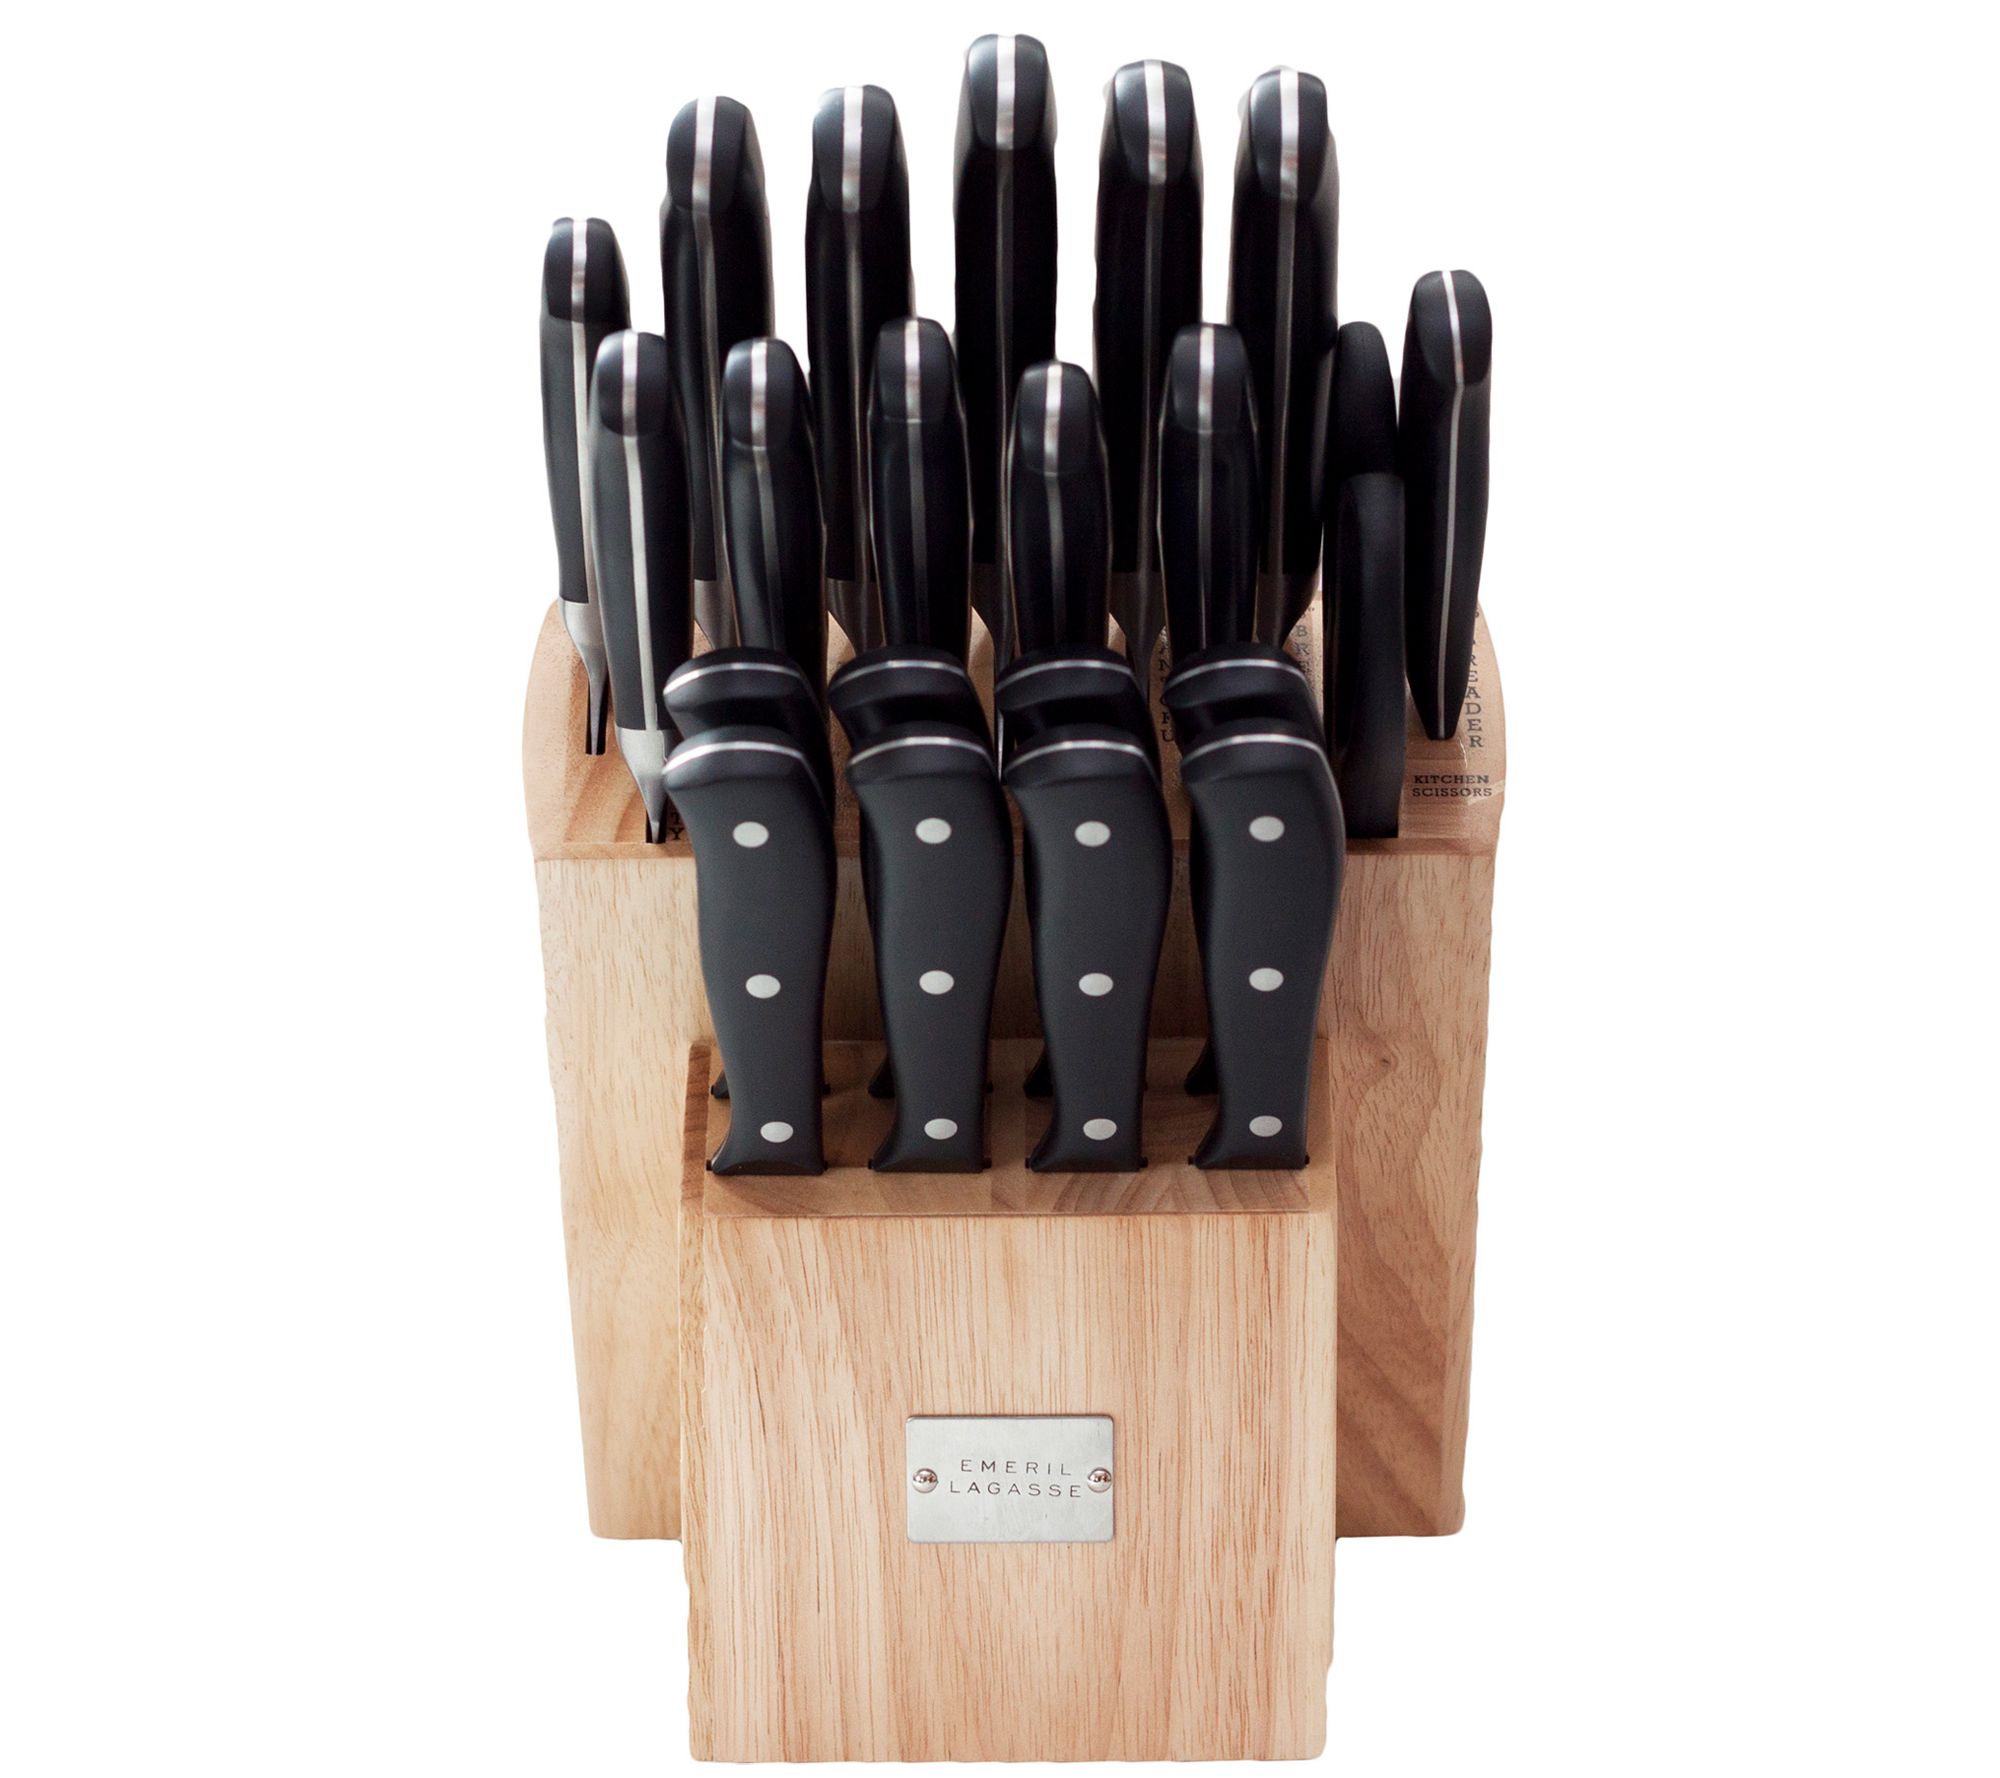 Emeril Lagasse Best Kitchen Knives Collection - 8-Piece 4.5â